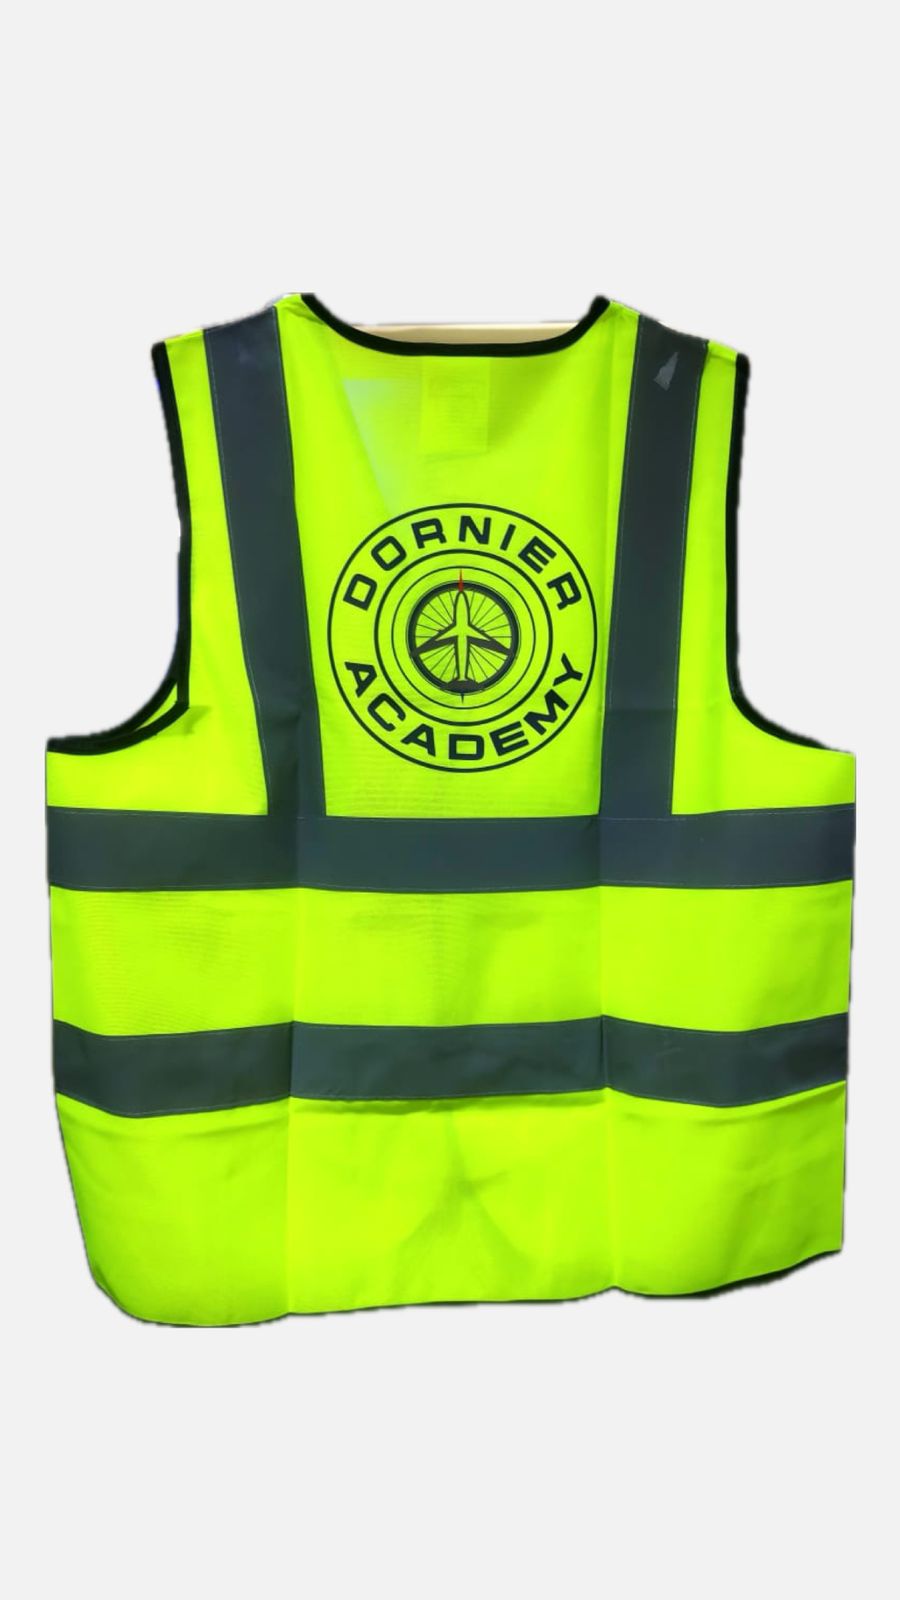 Safety Vest with Dornier Academy Logo